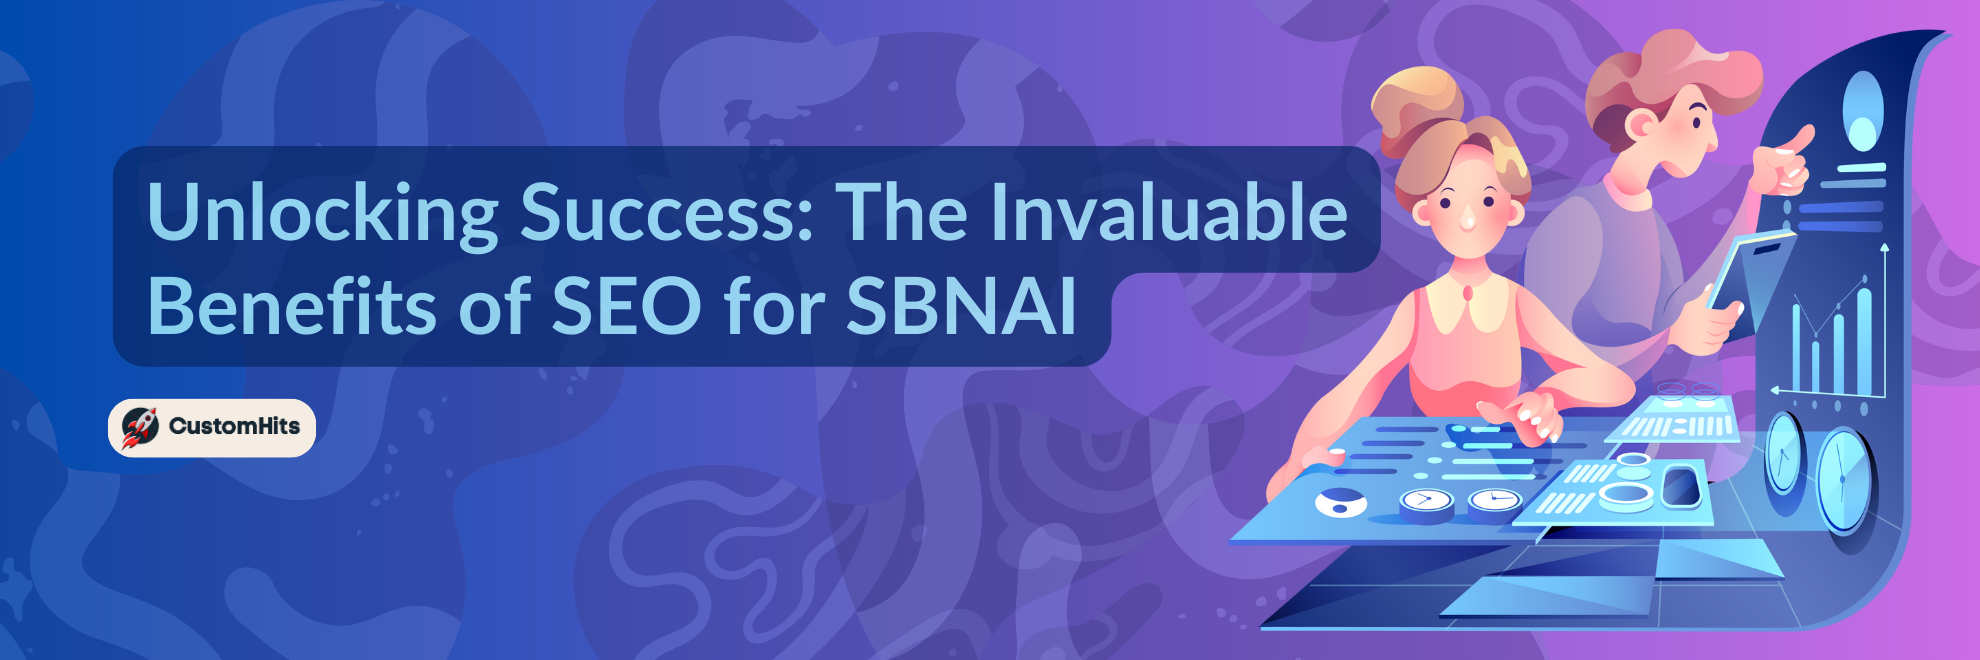 Unlocking Success: The Invaluable Benefits of SEO for SBNAI